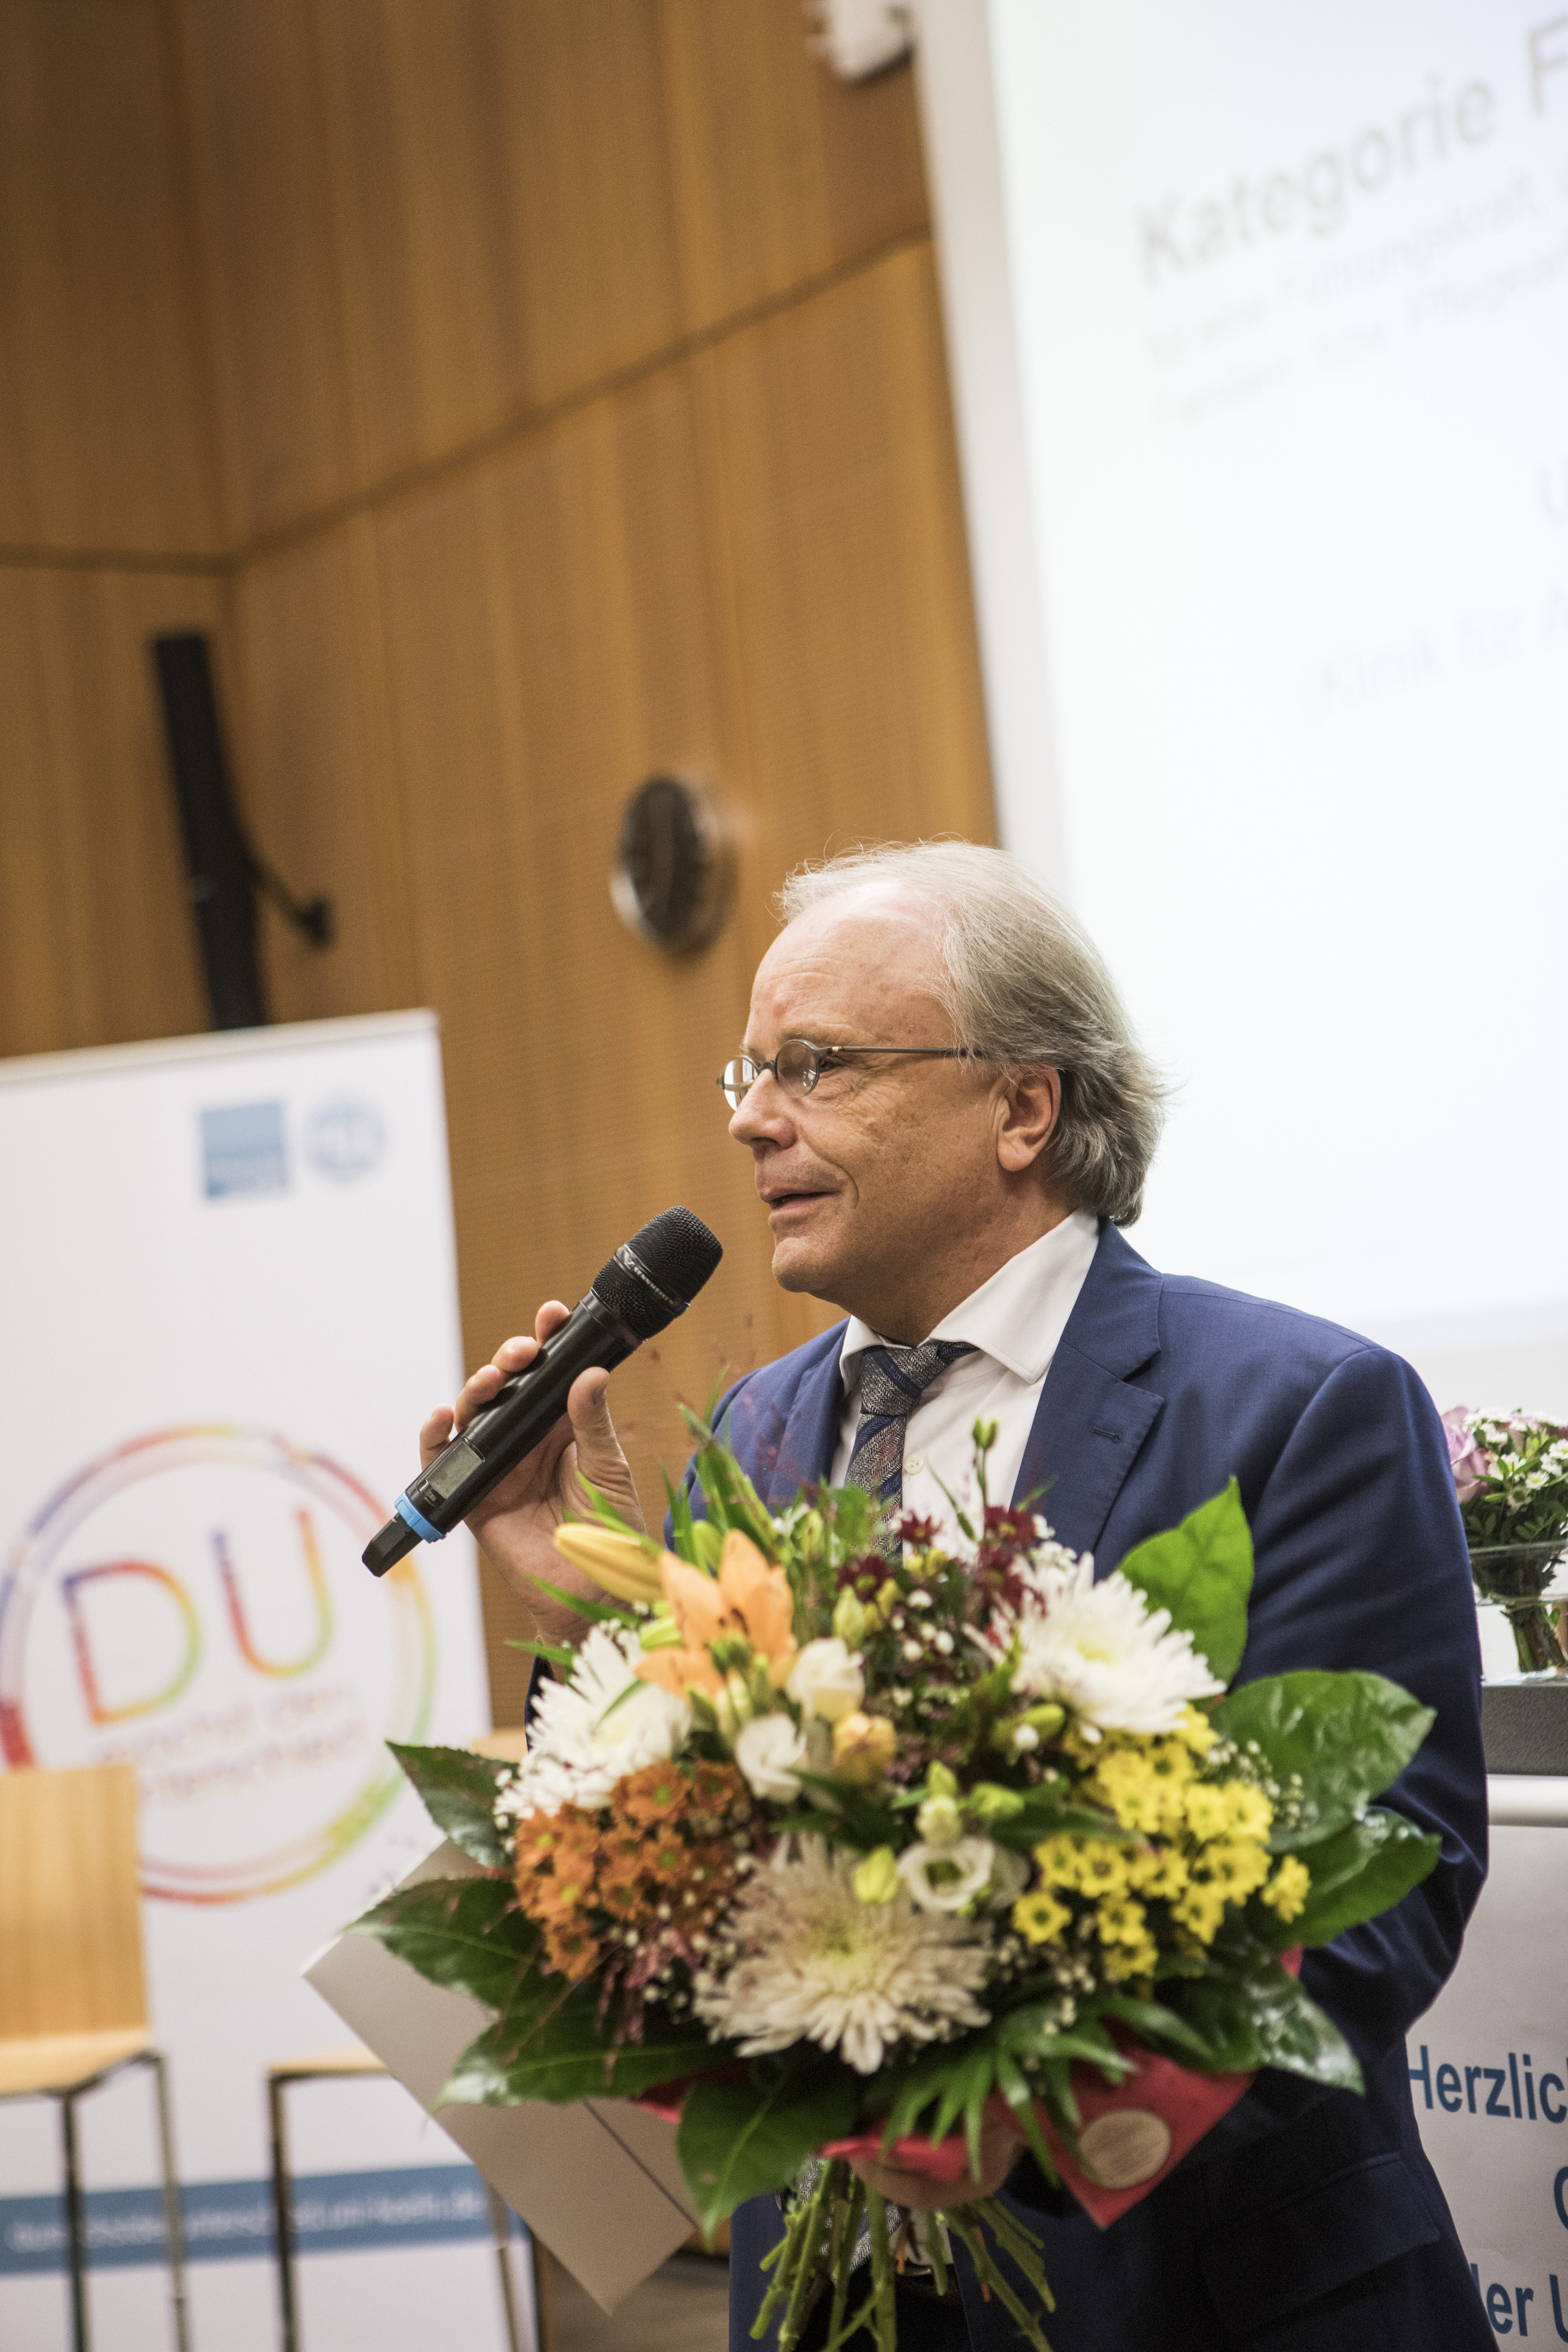 Professor Dr. med. Bernd W. Böttiger, Preisträger des Preises "Familienfreundliche Führung"